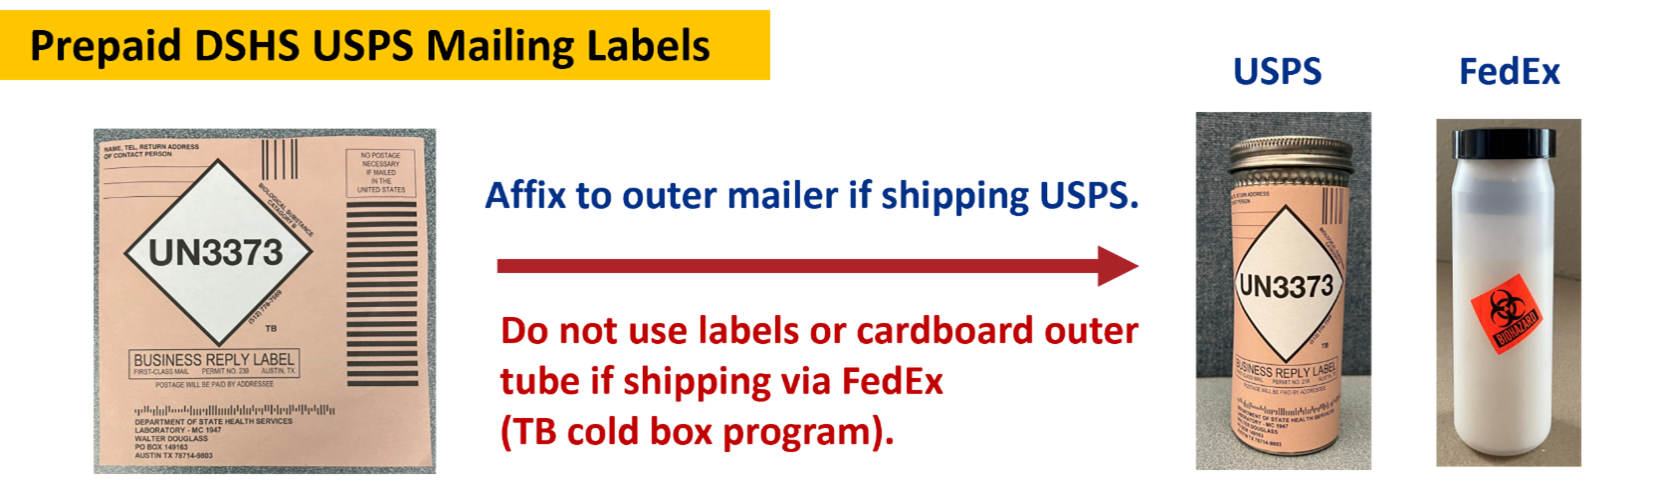 "Prepaid DSHS USPS Mailing Labels"